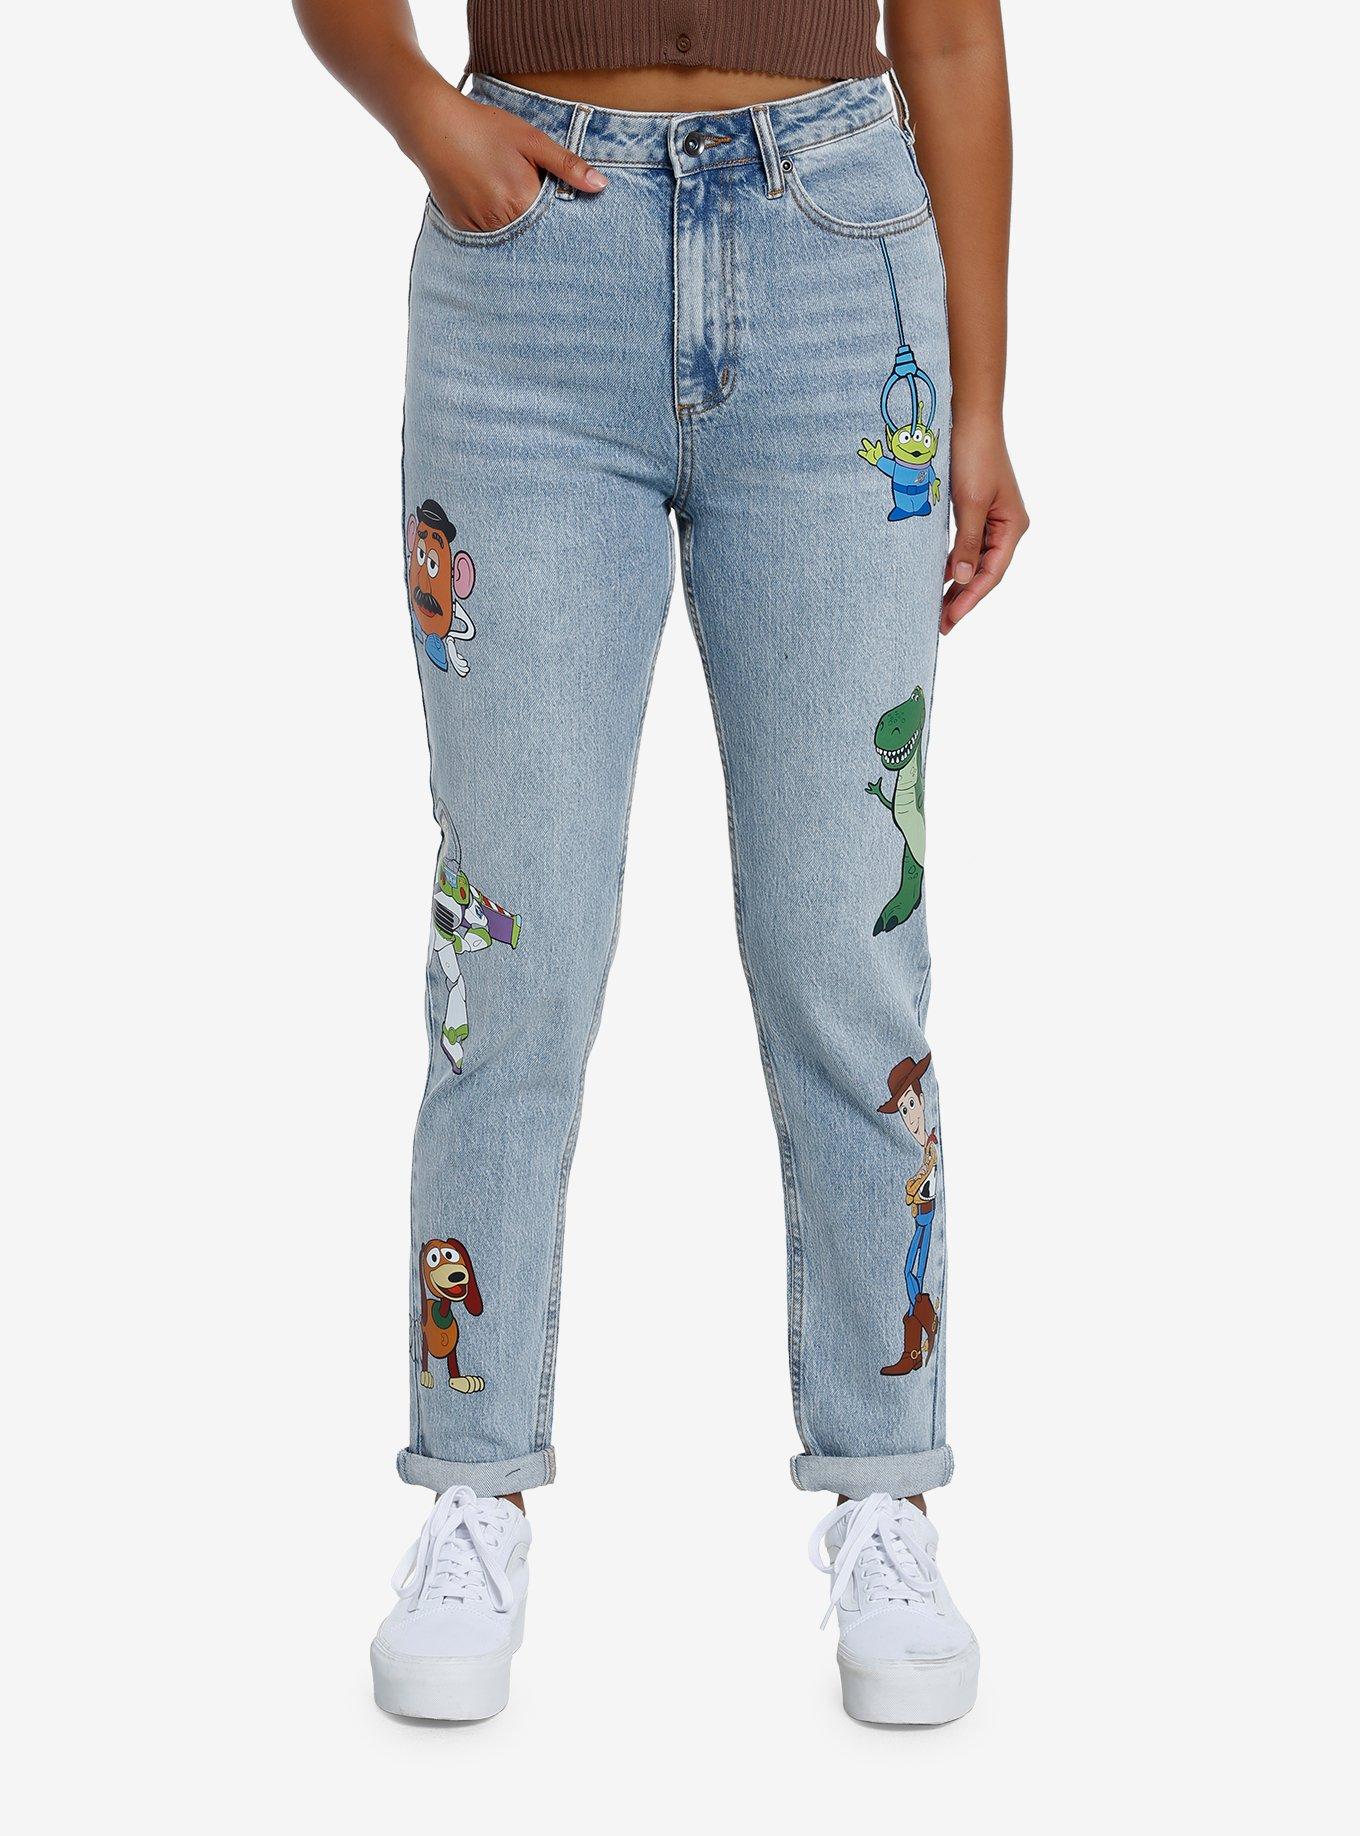 Pixar mom jeans